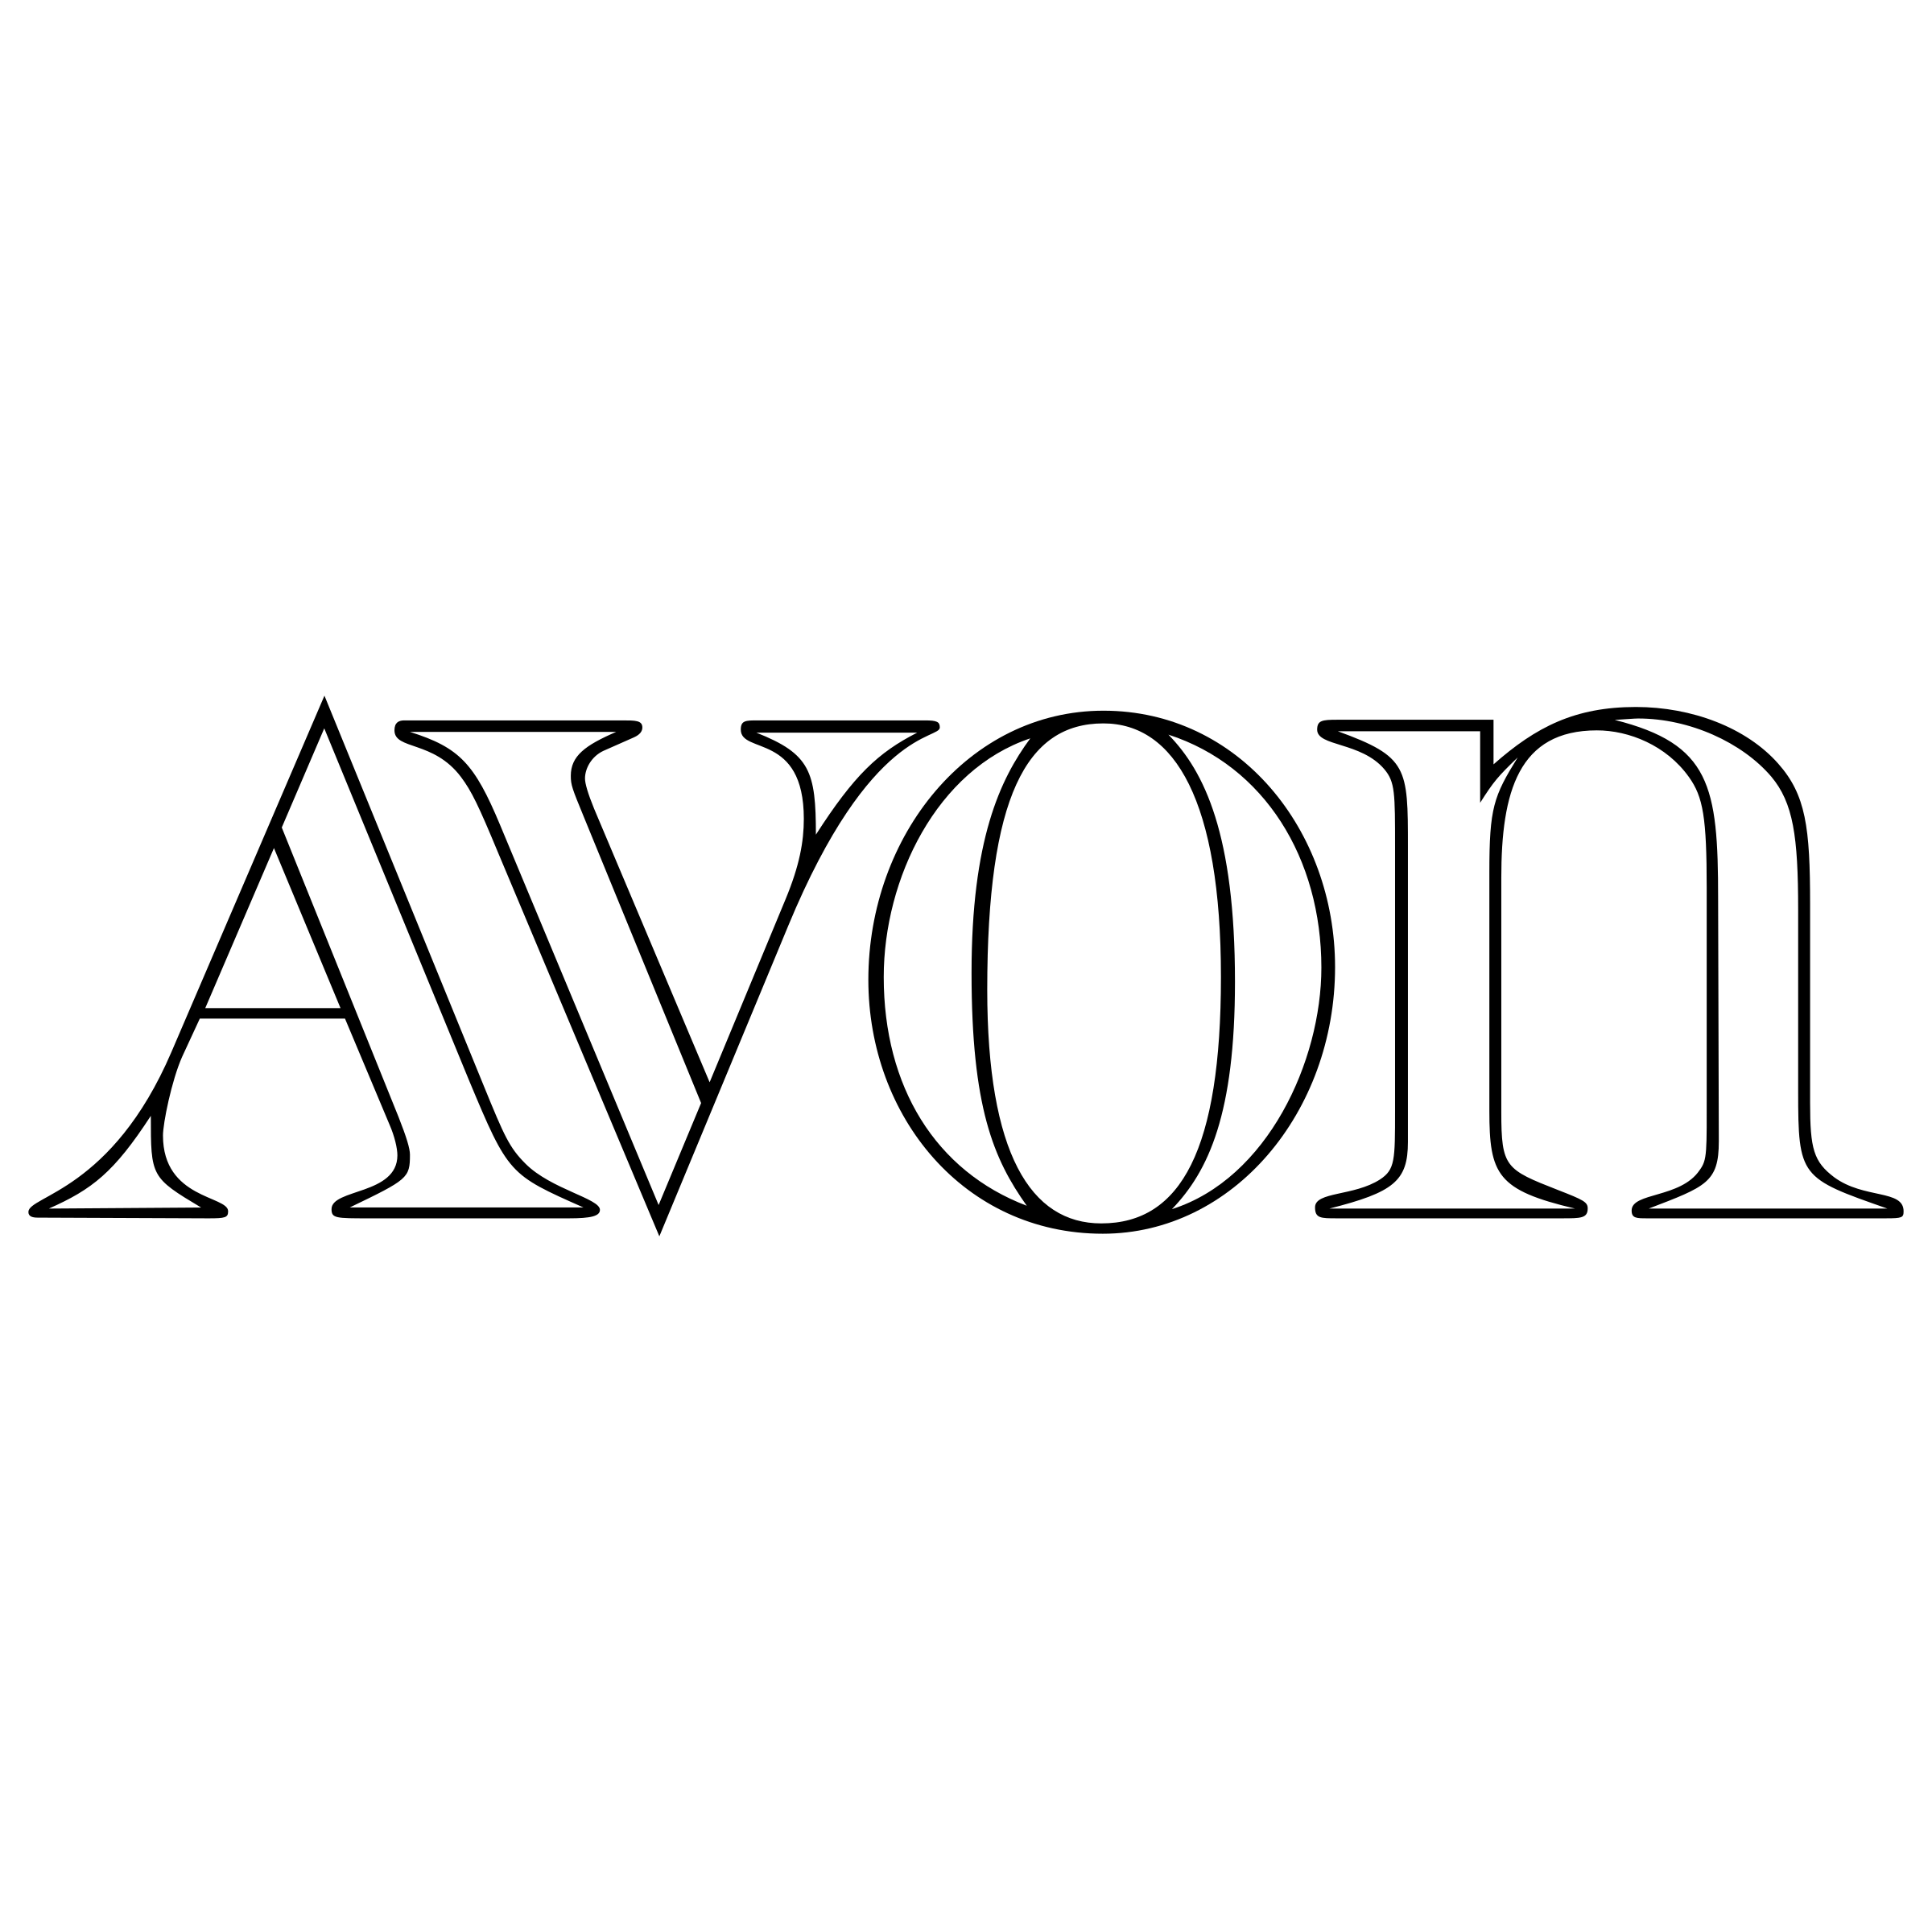 Avon Transparent Logo - Avon 02 Logo PNG Transparent & SVG Vector - Freebie Supply